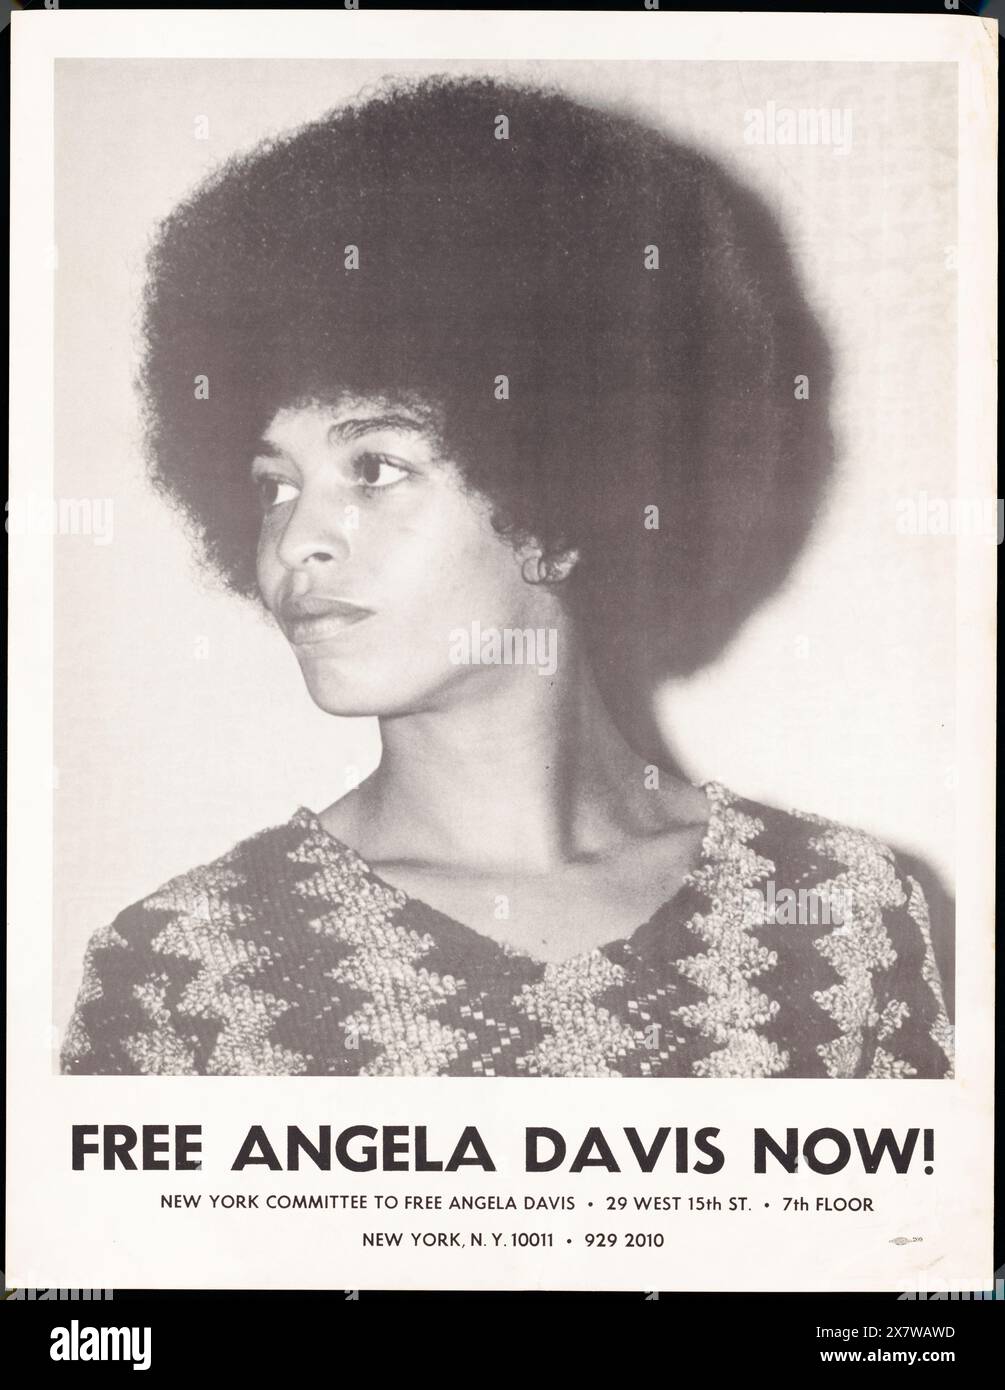 Jetzt kostenlos Angela Davis! Poster. c 1971. Stockfoto